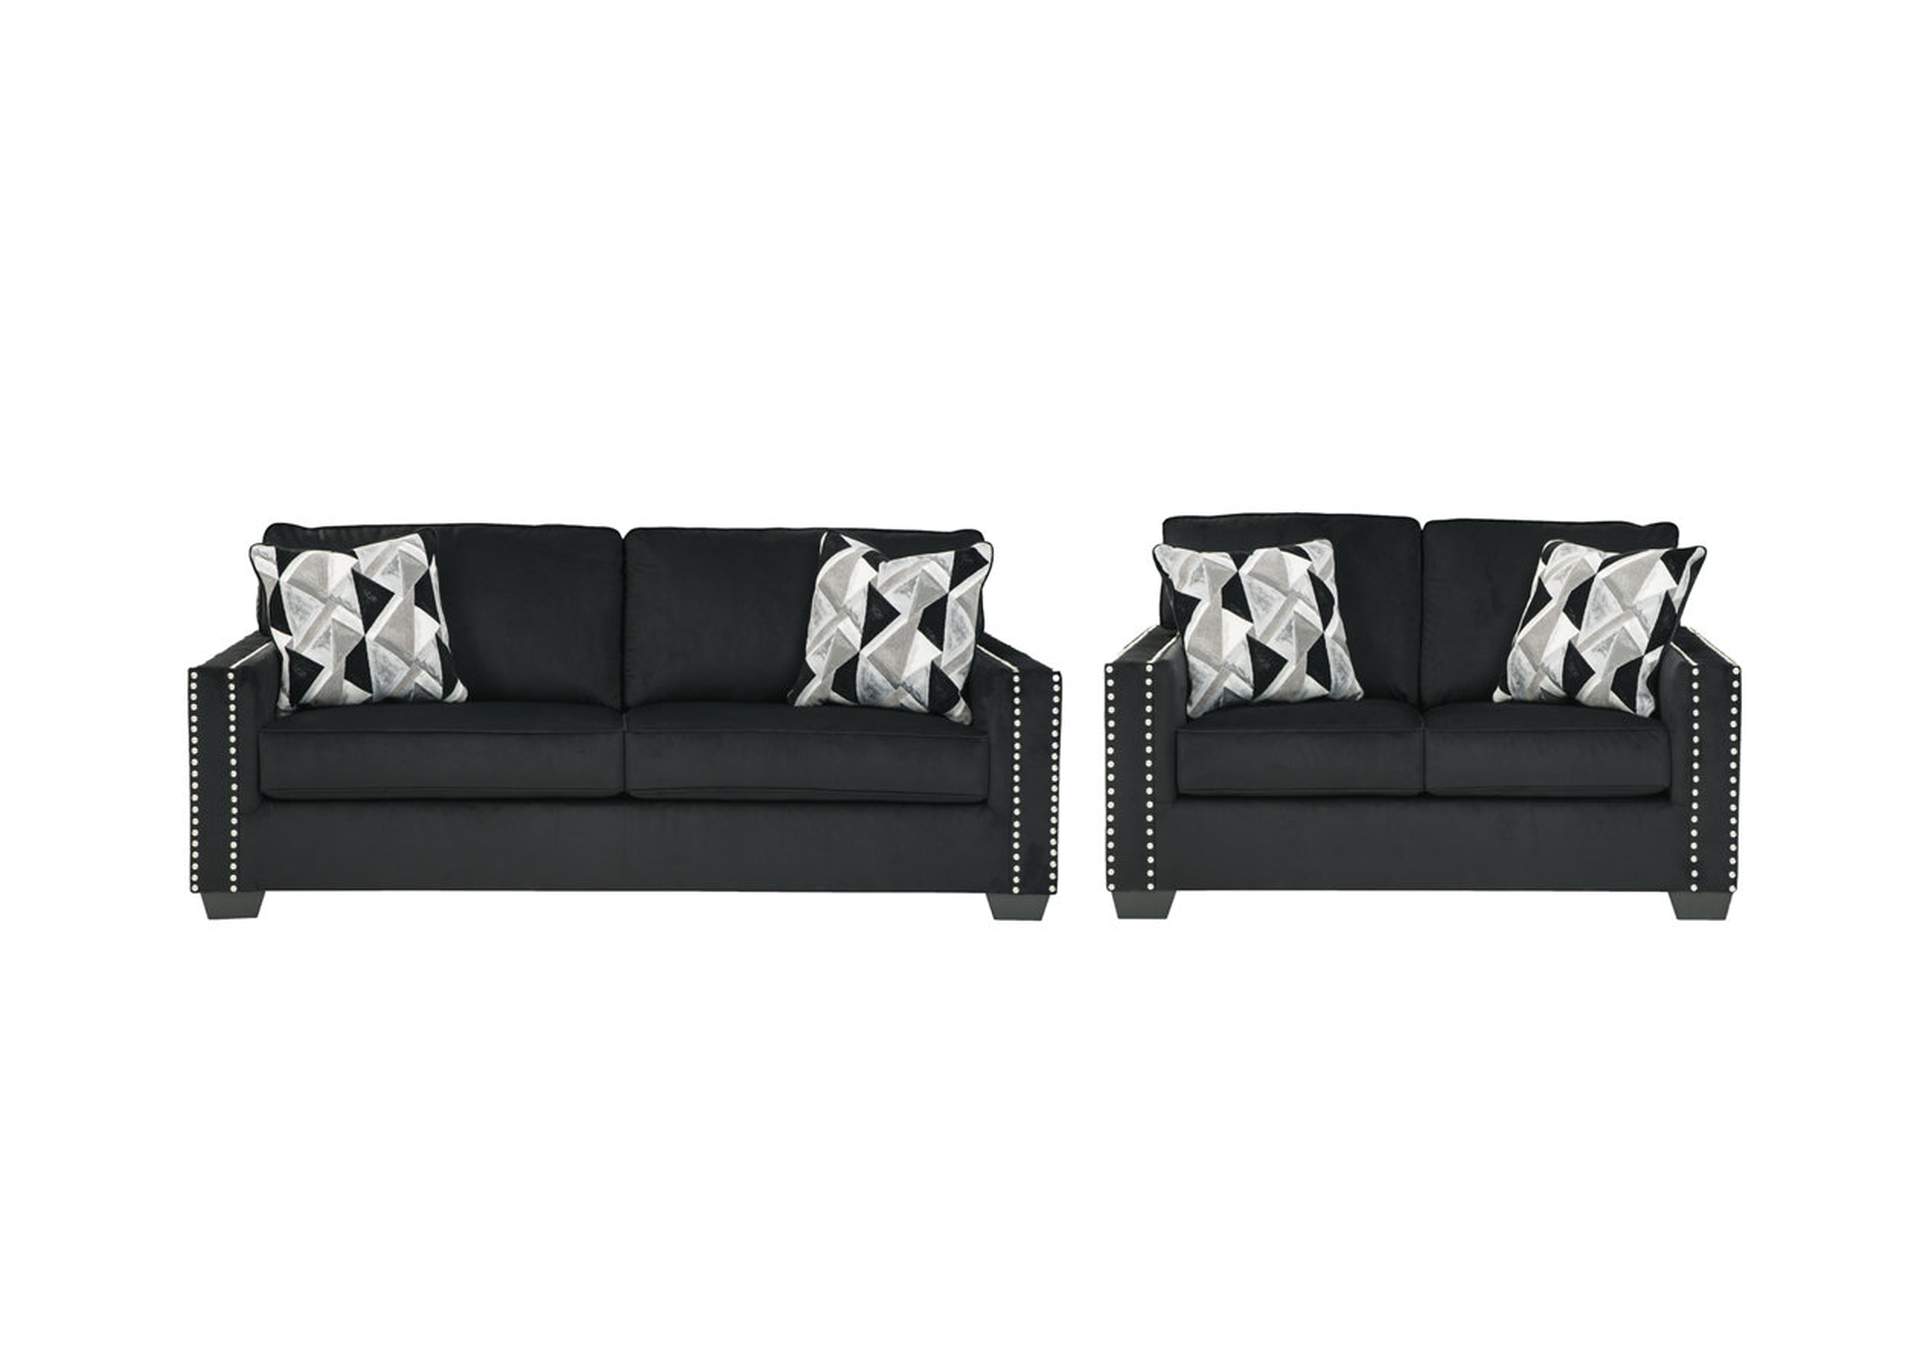 Gleston Sofa and Loveseat,Signature Design By Ashley